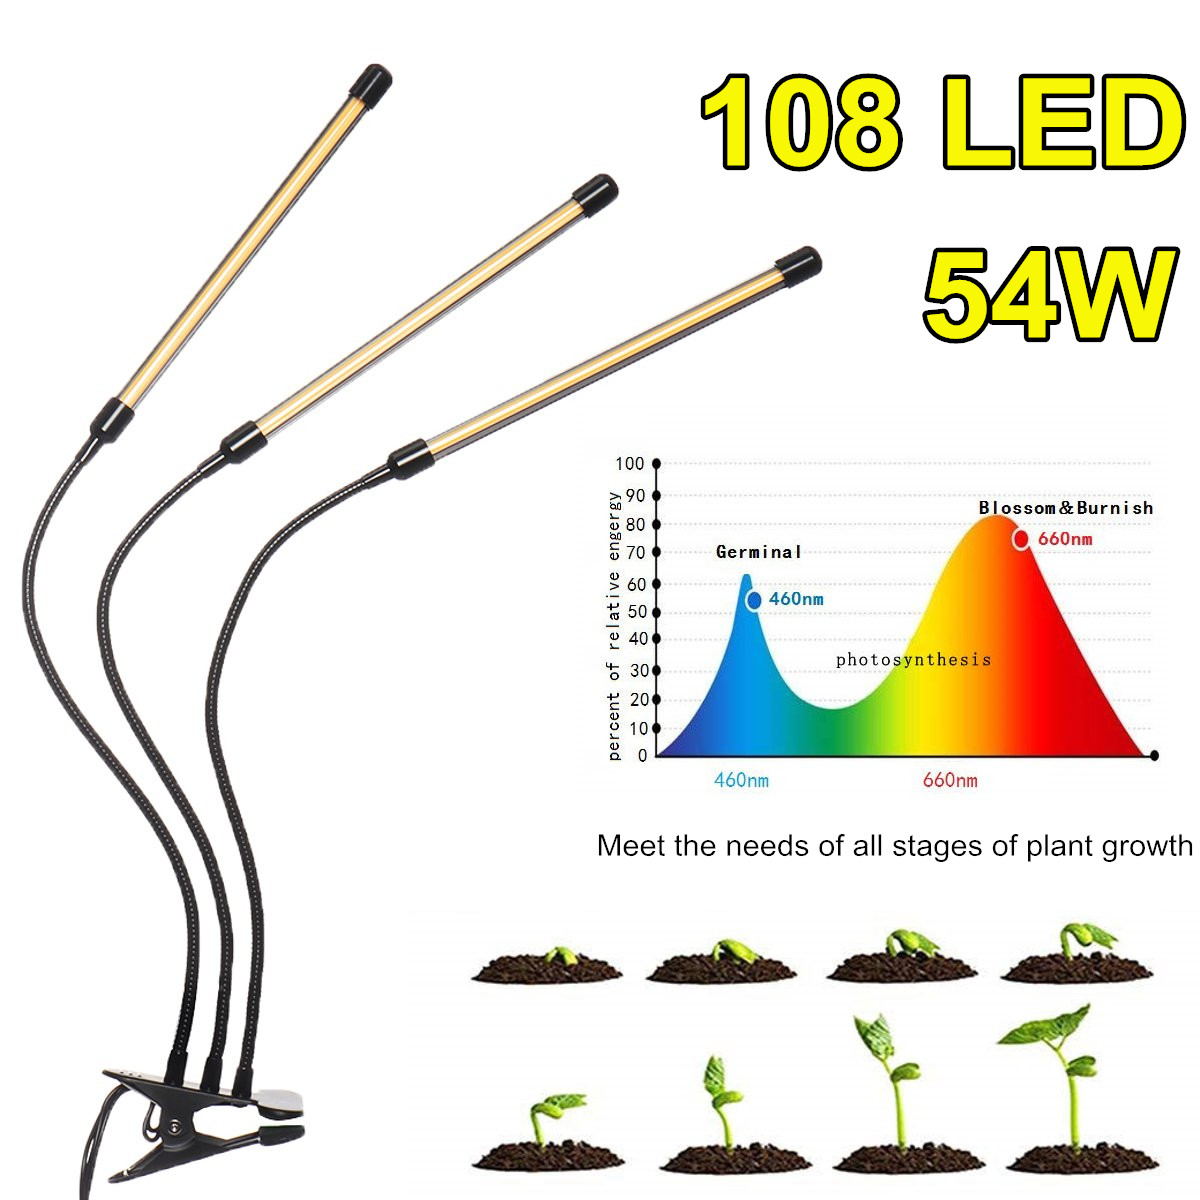 3-Head-108LED-54W-Plant-Growing-Lamp-Flower-Grow-Light-Hydroponics-Full-Spectrum-1726616-1